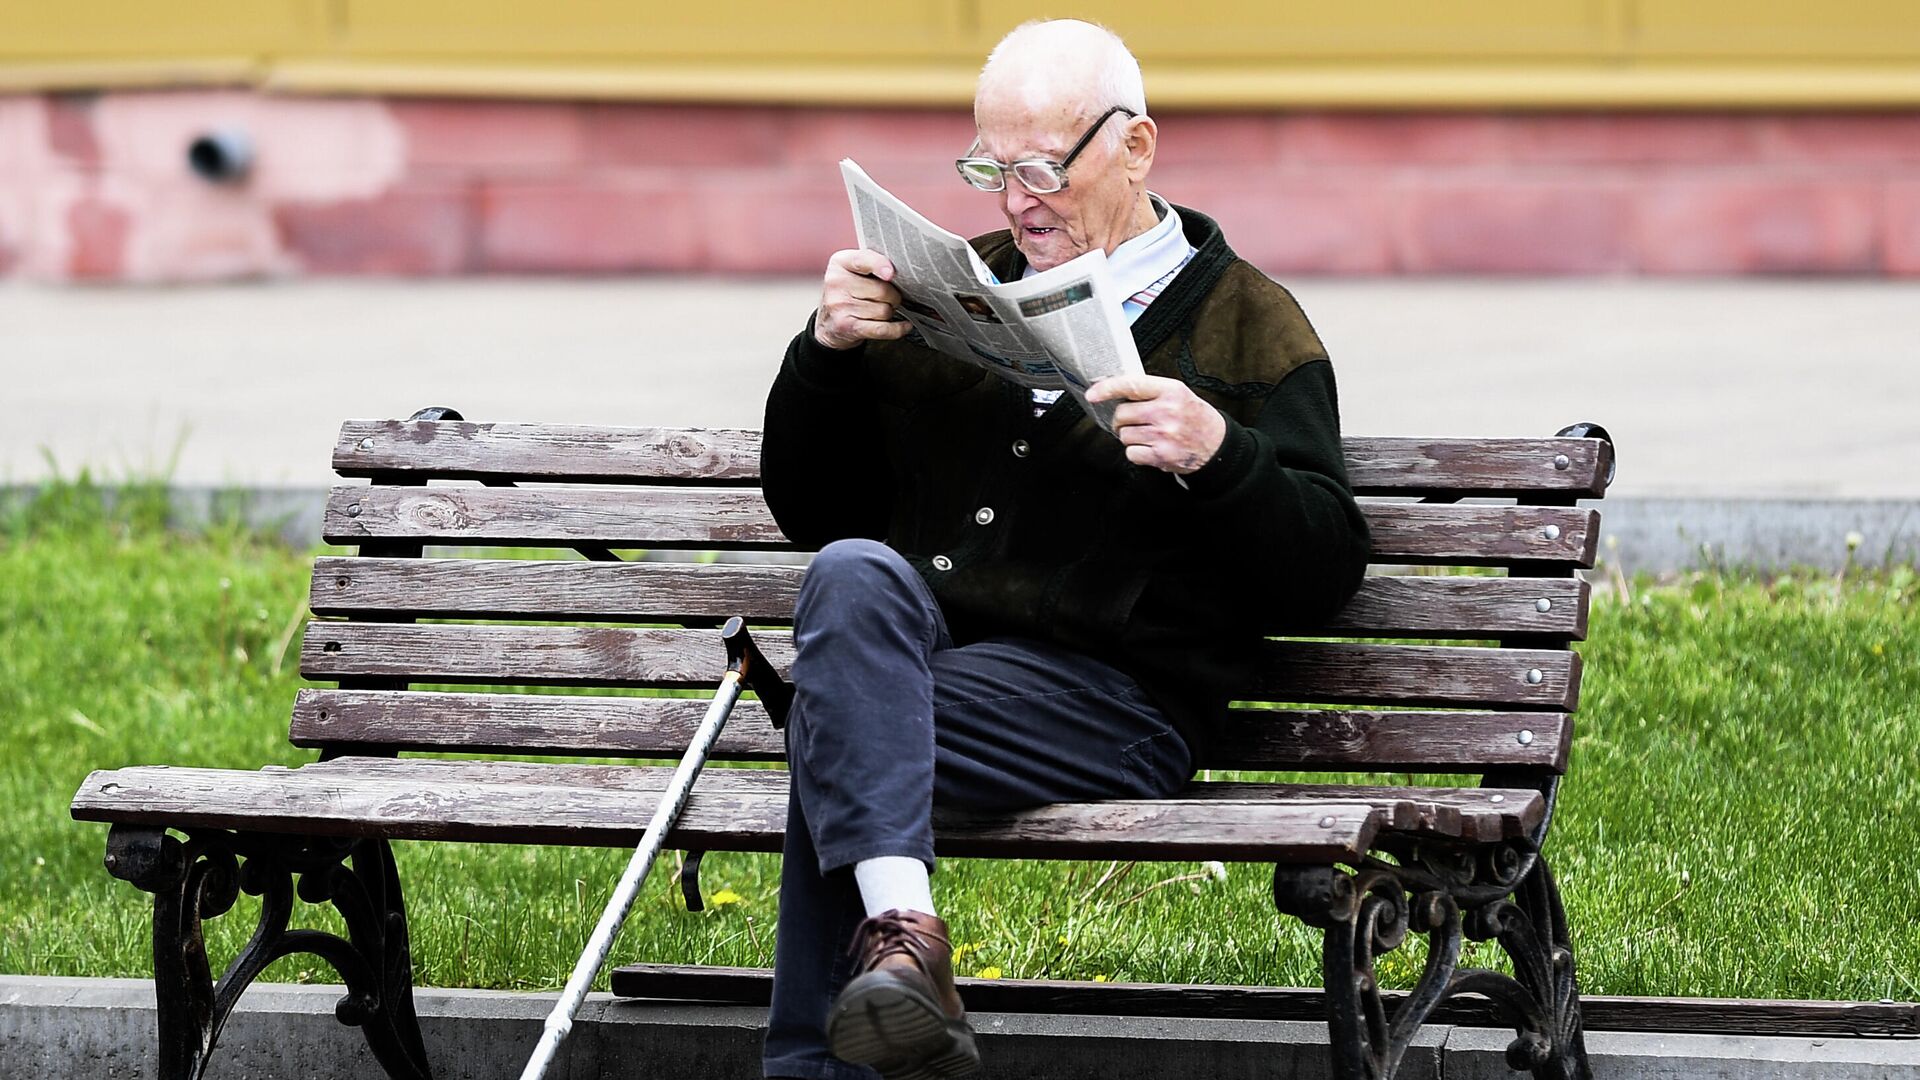 Мужчина читает газету на улице на лавочке в Москве - РИА Новости, 1920, 09.09.2020